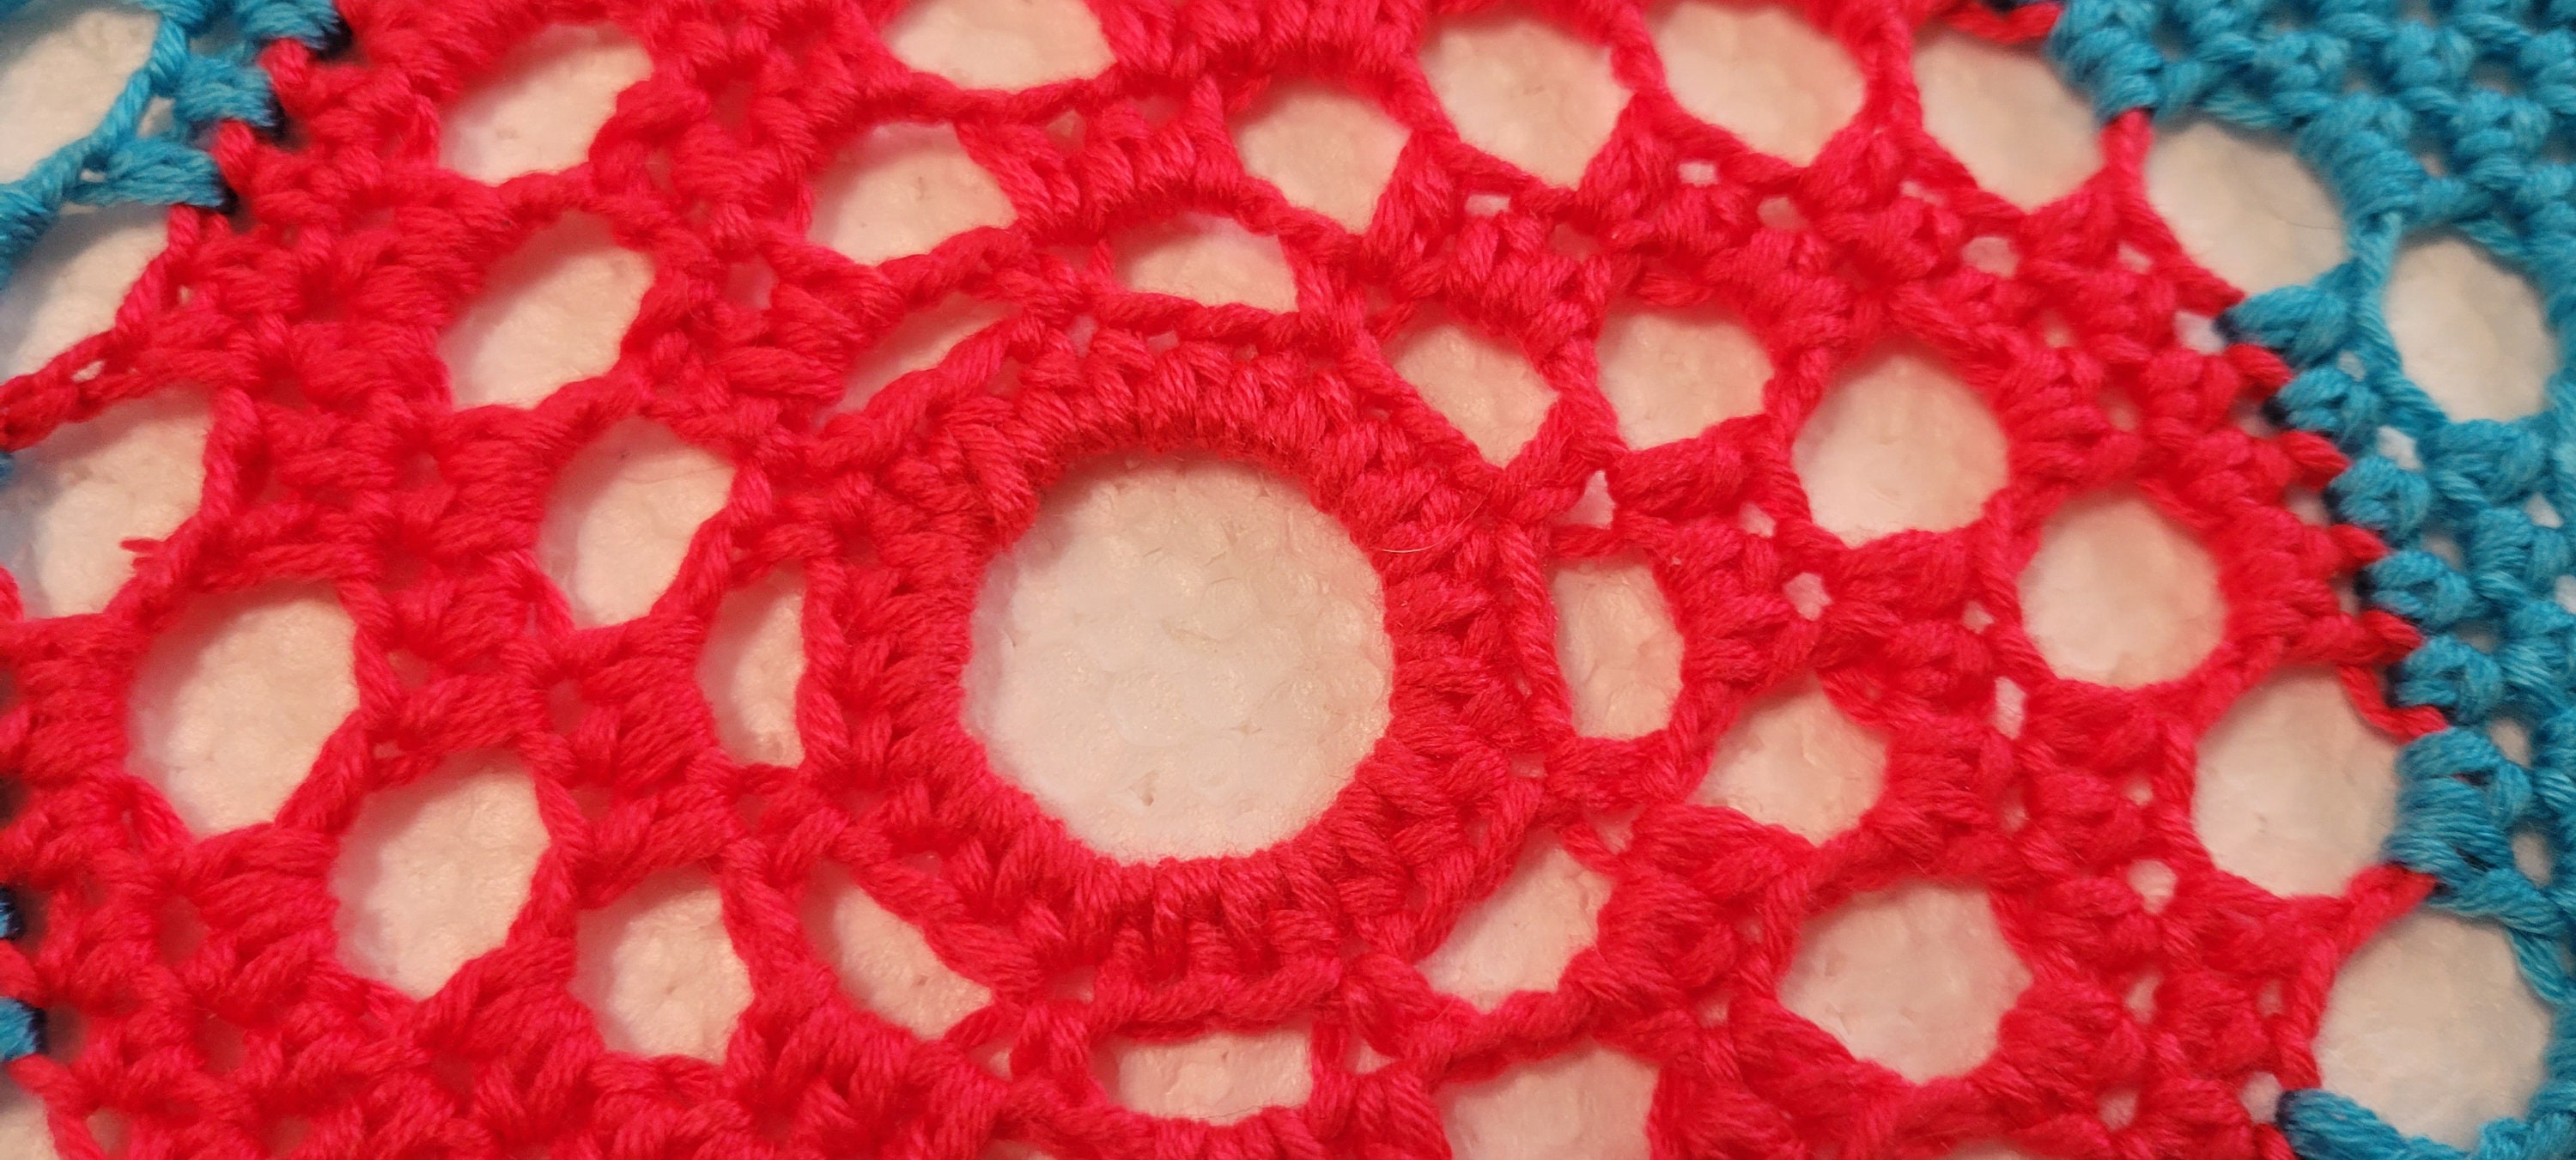 PDF DIGITAL Crochet Pattern Wheelchair Wheel Cover Gift for